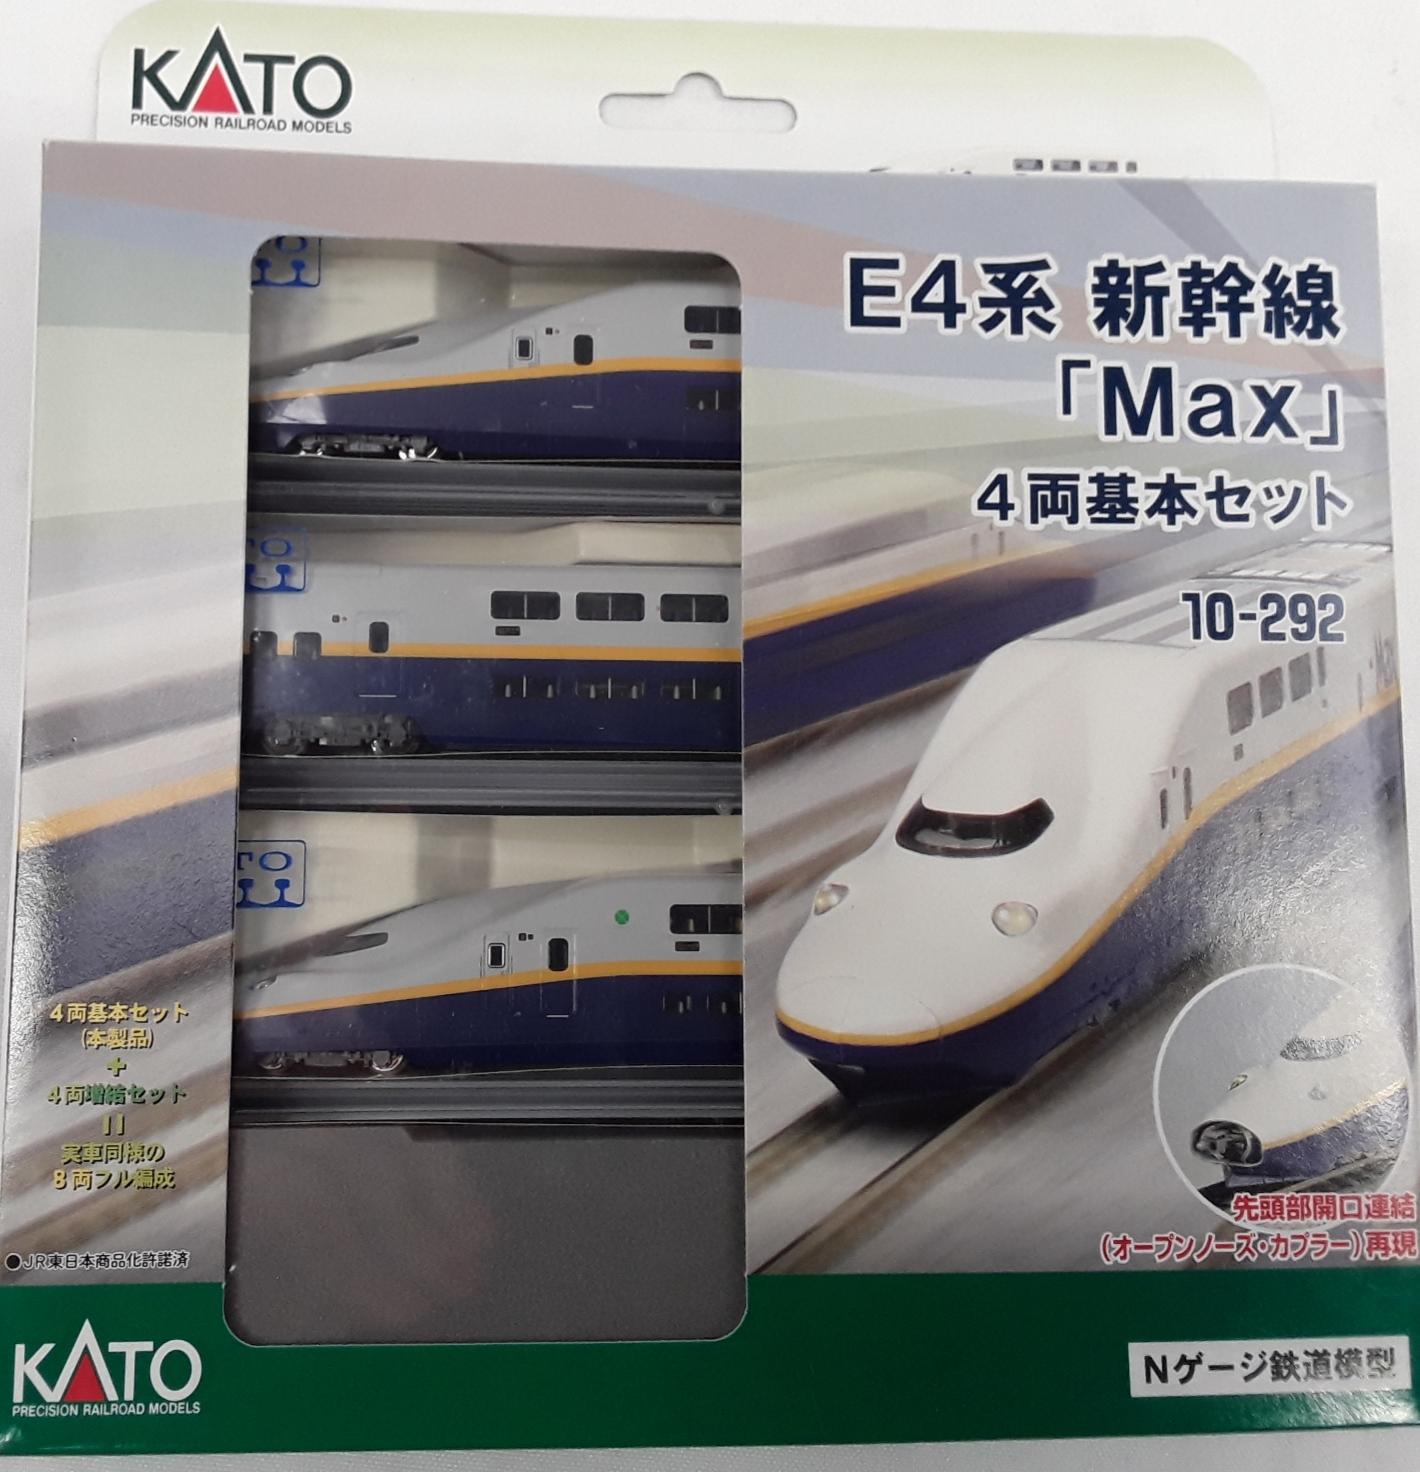 Kato N Gauge 10-292 Series E4 Shinkansen "MAX" (4 car basic set) - missing 1 car. Mint in Near